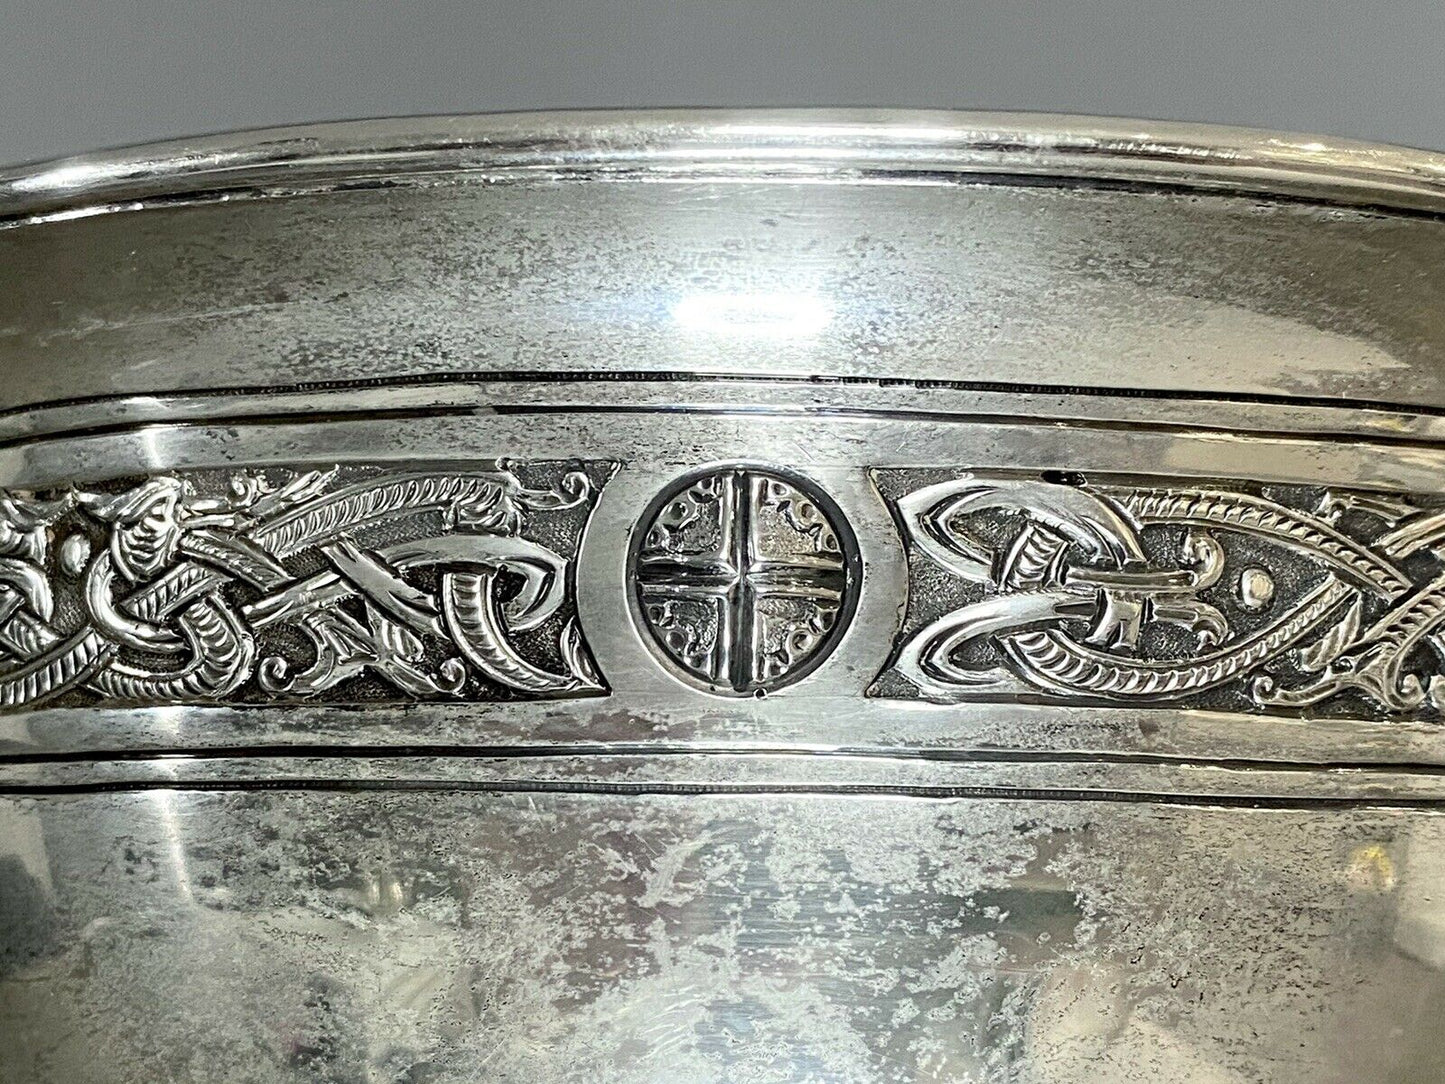 A Large Irish Celtic Revival Twin Handled Silver Bowl, Dublin 1909